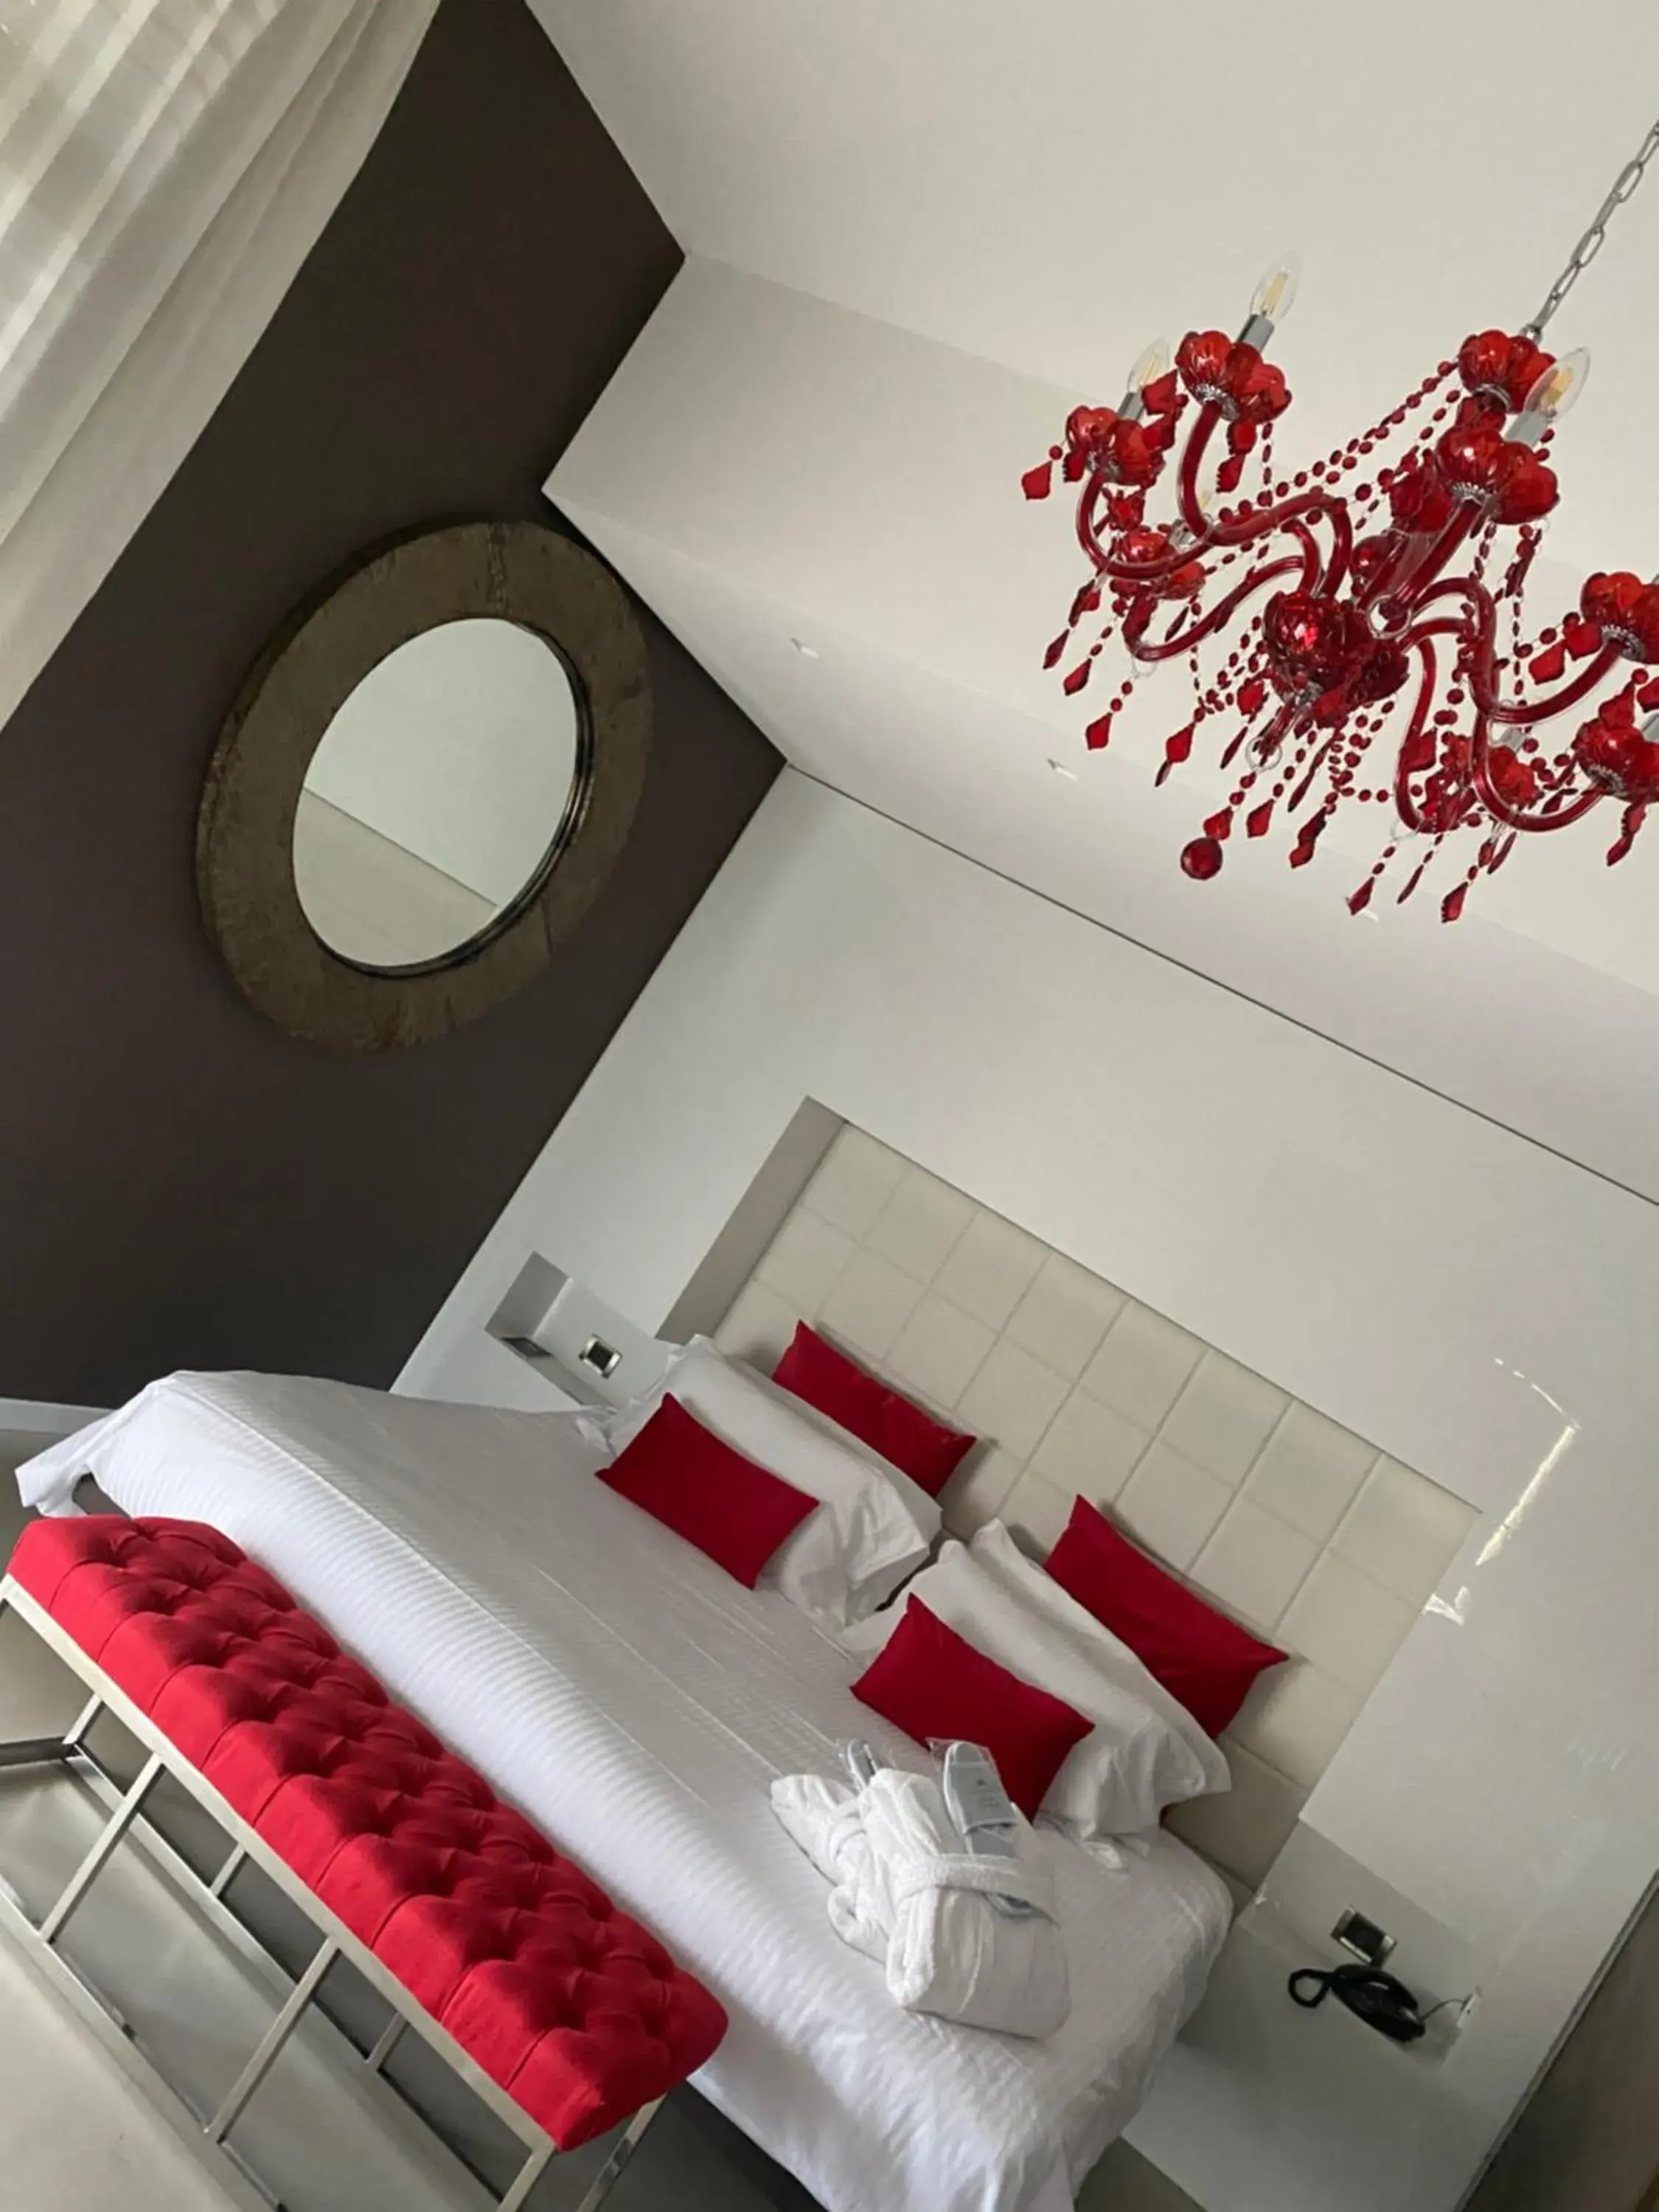 Bed in Gran Paradiso Hotel Spa